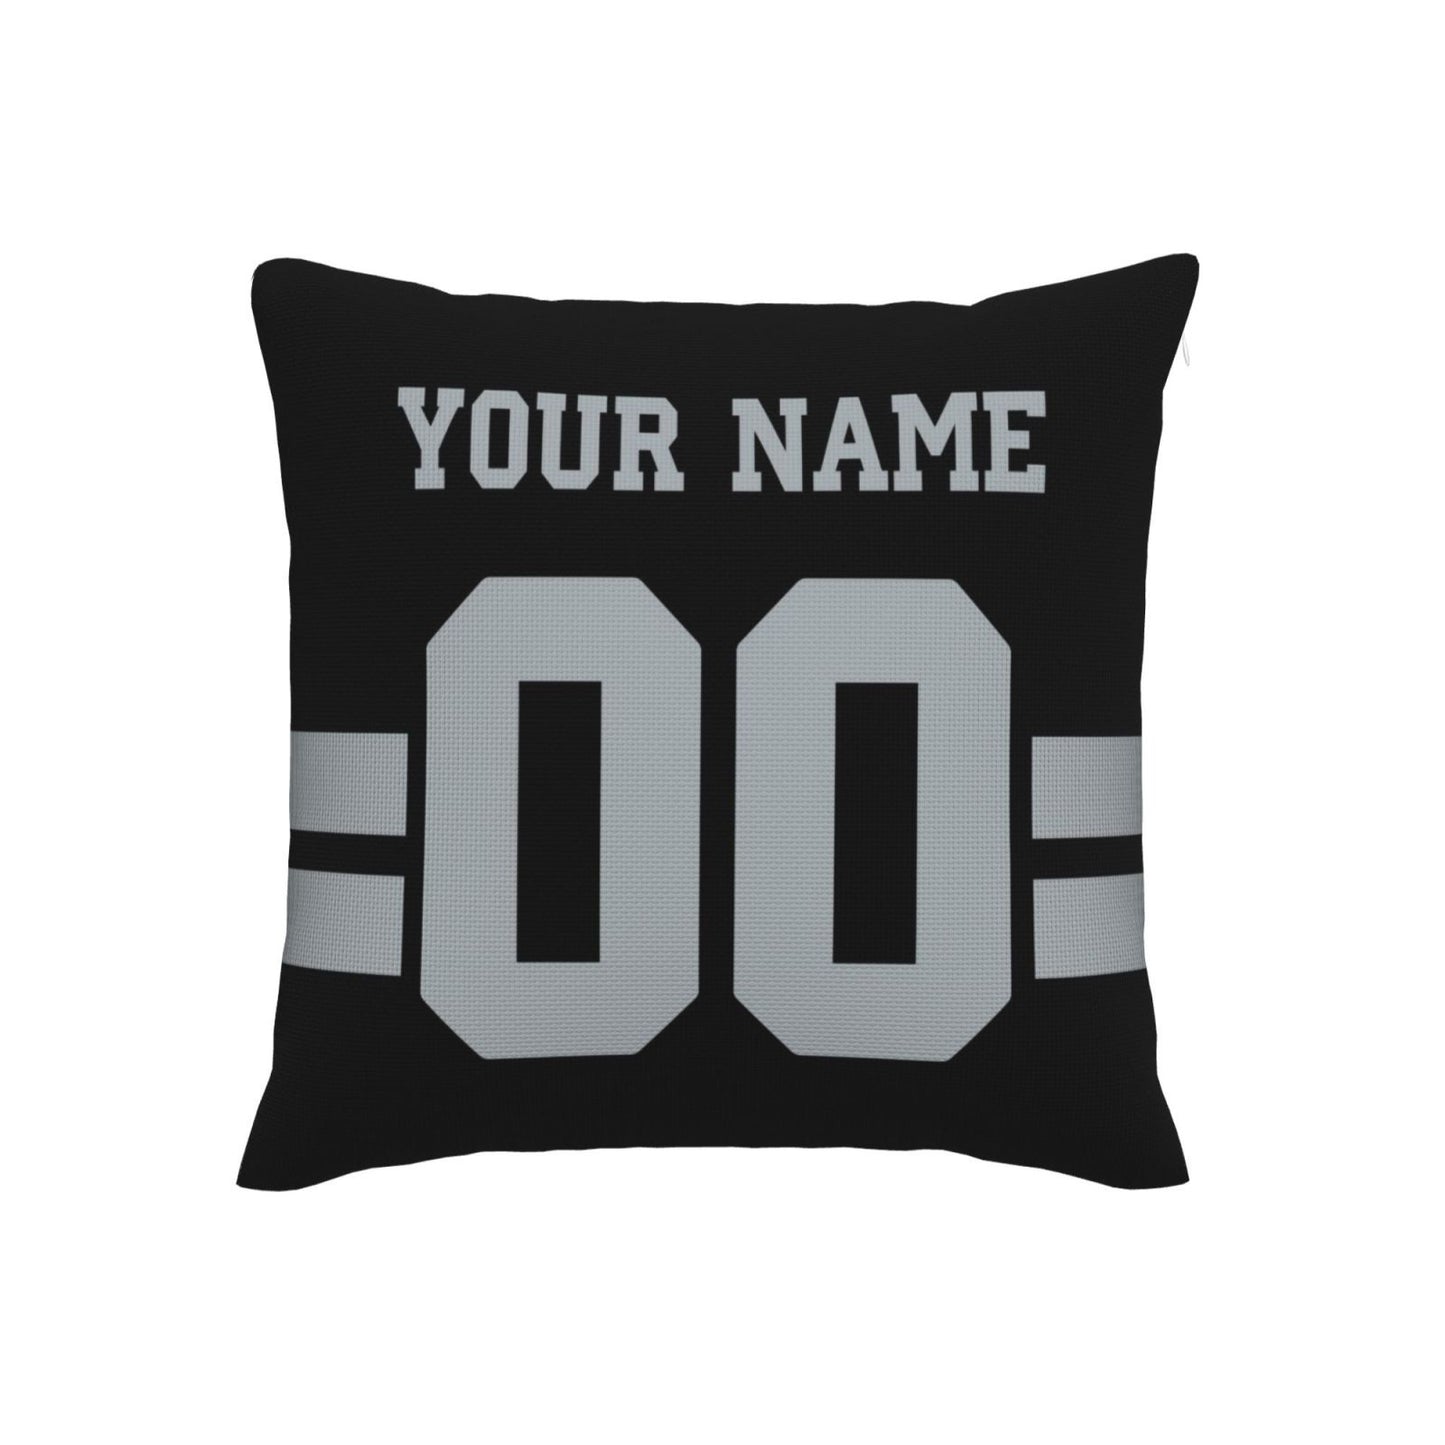 Custom Black Las Vegas Raiders Decorative Throw Pillow Case - Print Personalized Football Team Fans Name & Number Birthday Gift